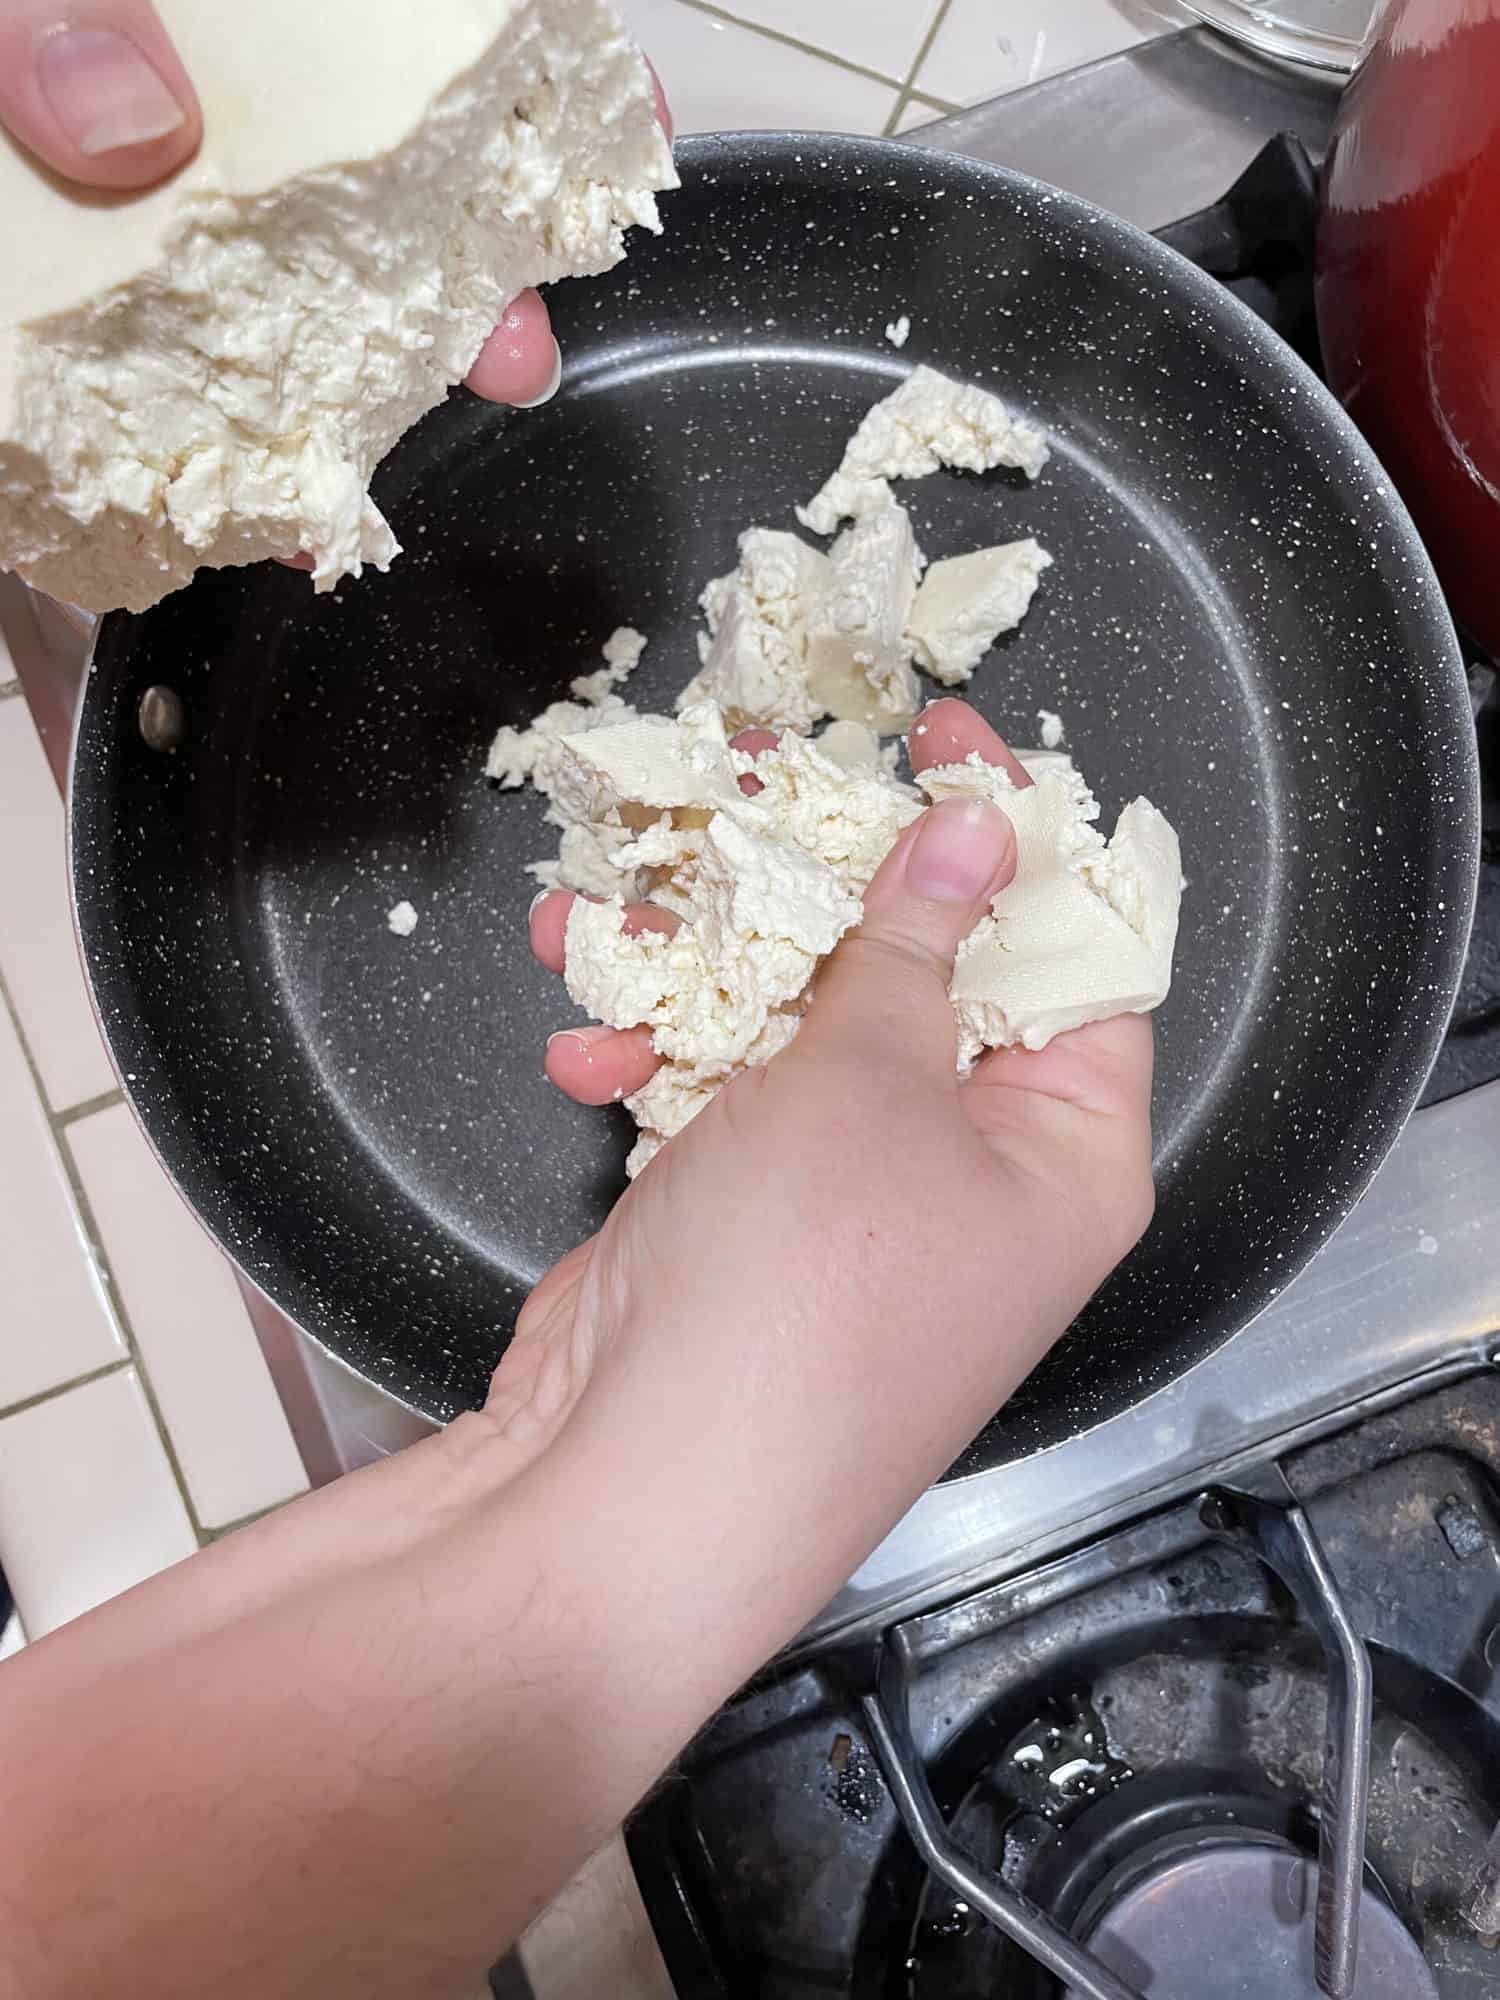 crumbling tofu into pan